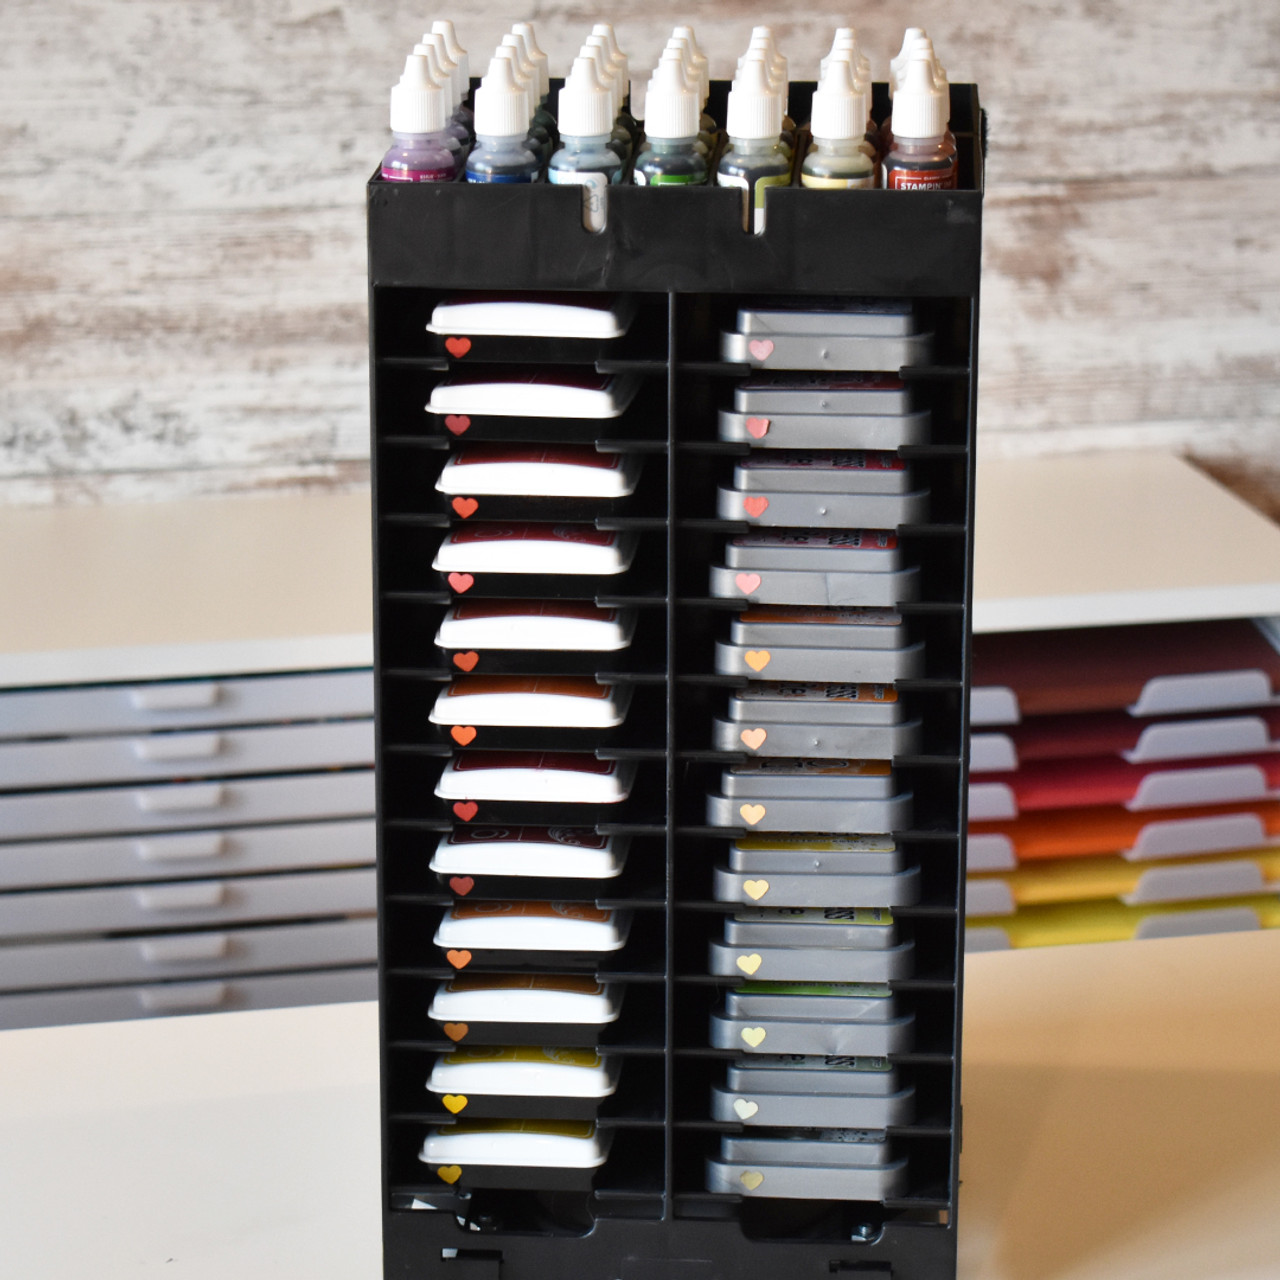 Krafetto Ink Pad Combo Storage Rack, 28 Grids for Ink Pads, 28 Grids for  Markers, 28 Grids for Ink Refill, Art Supplies Organizer for Desktop